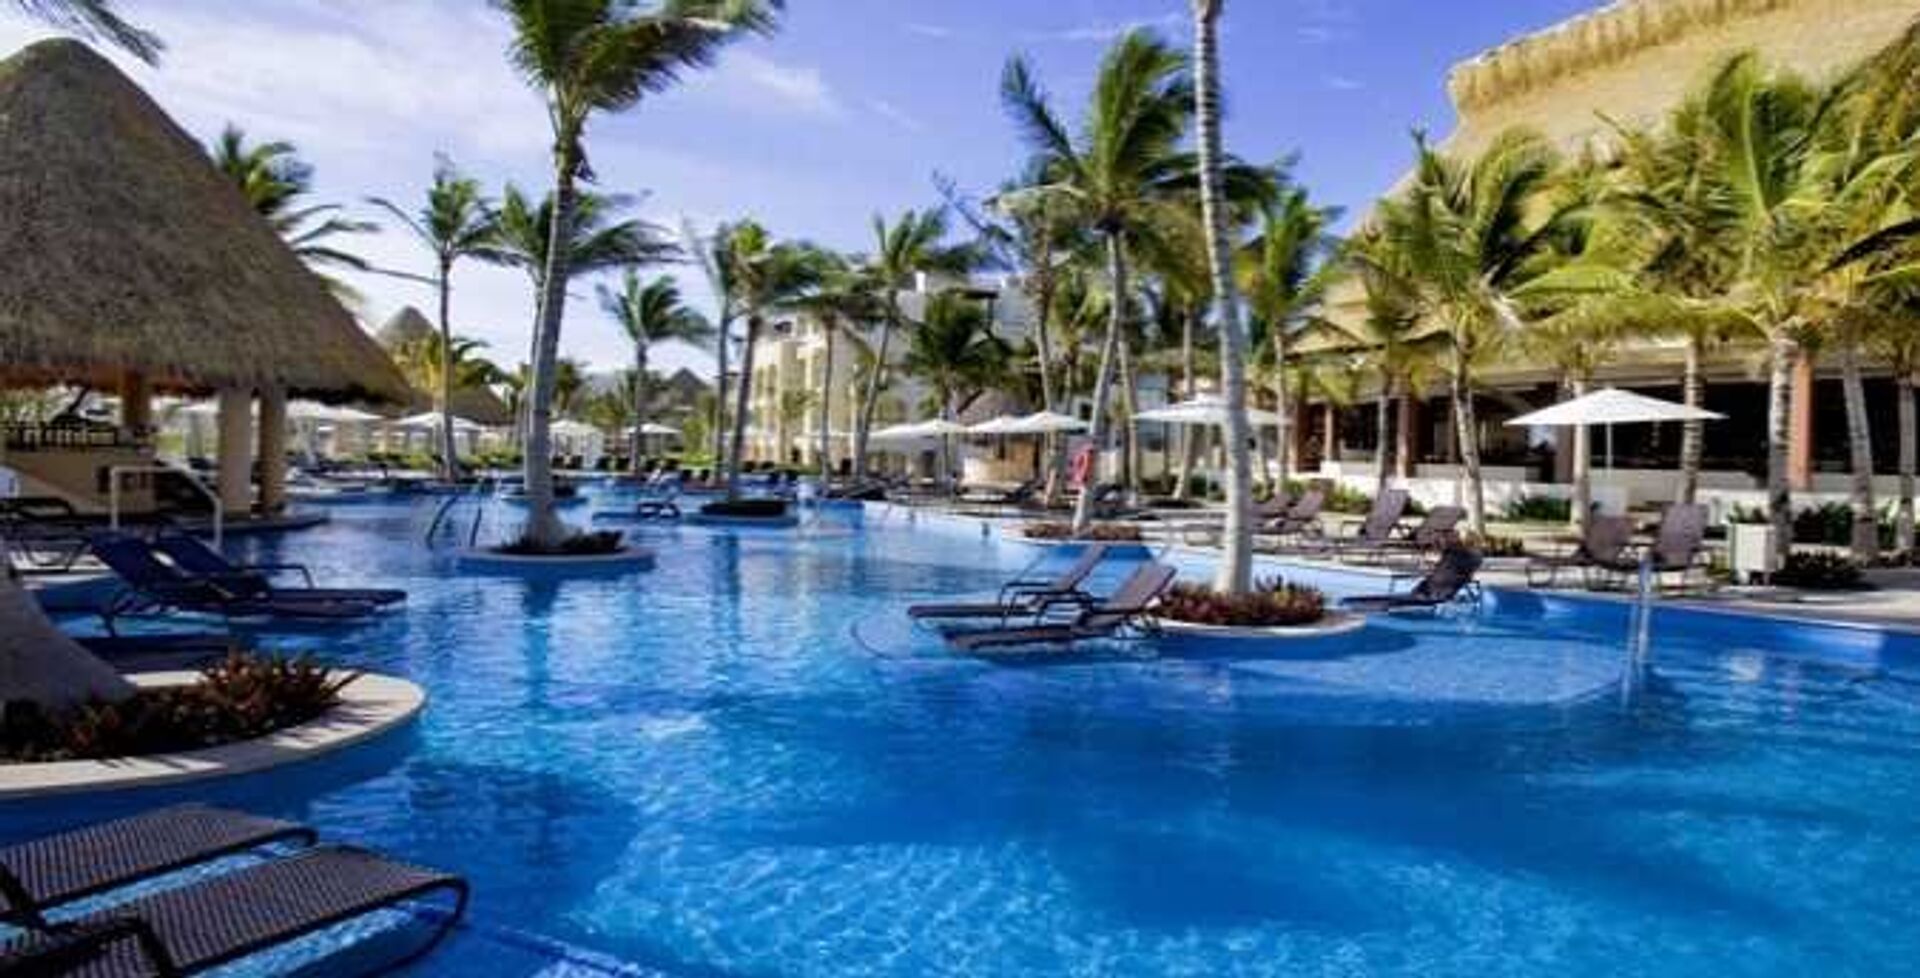 #Отель Moon Palace Casino, Golf & Spa Resort, ставший Hard Rock Hotel & Casino Punta Cana - ПРАЙМ, 1920, 20.08.2021